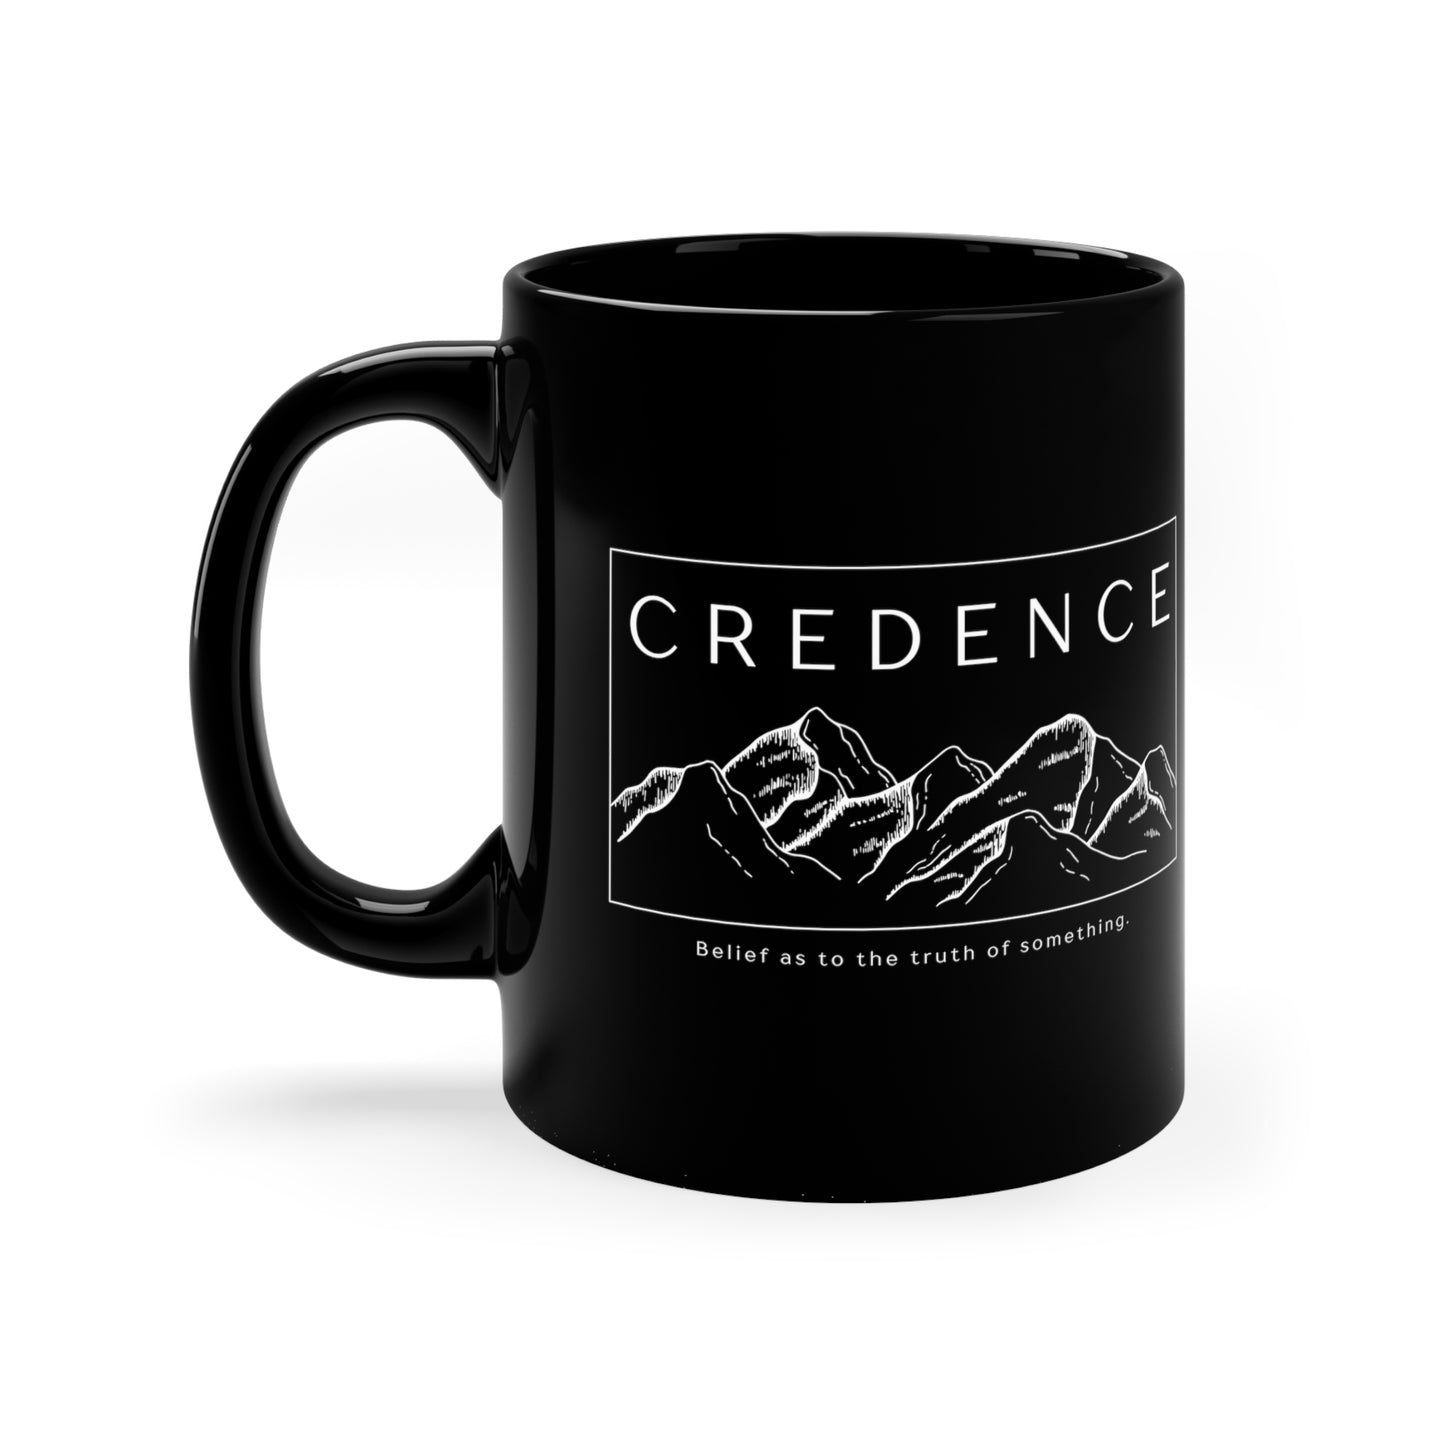 Credence Mug